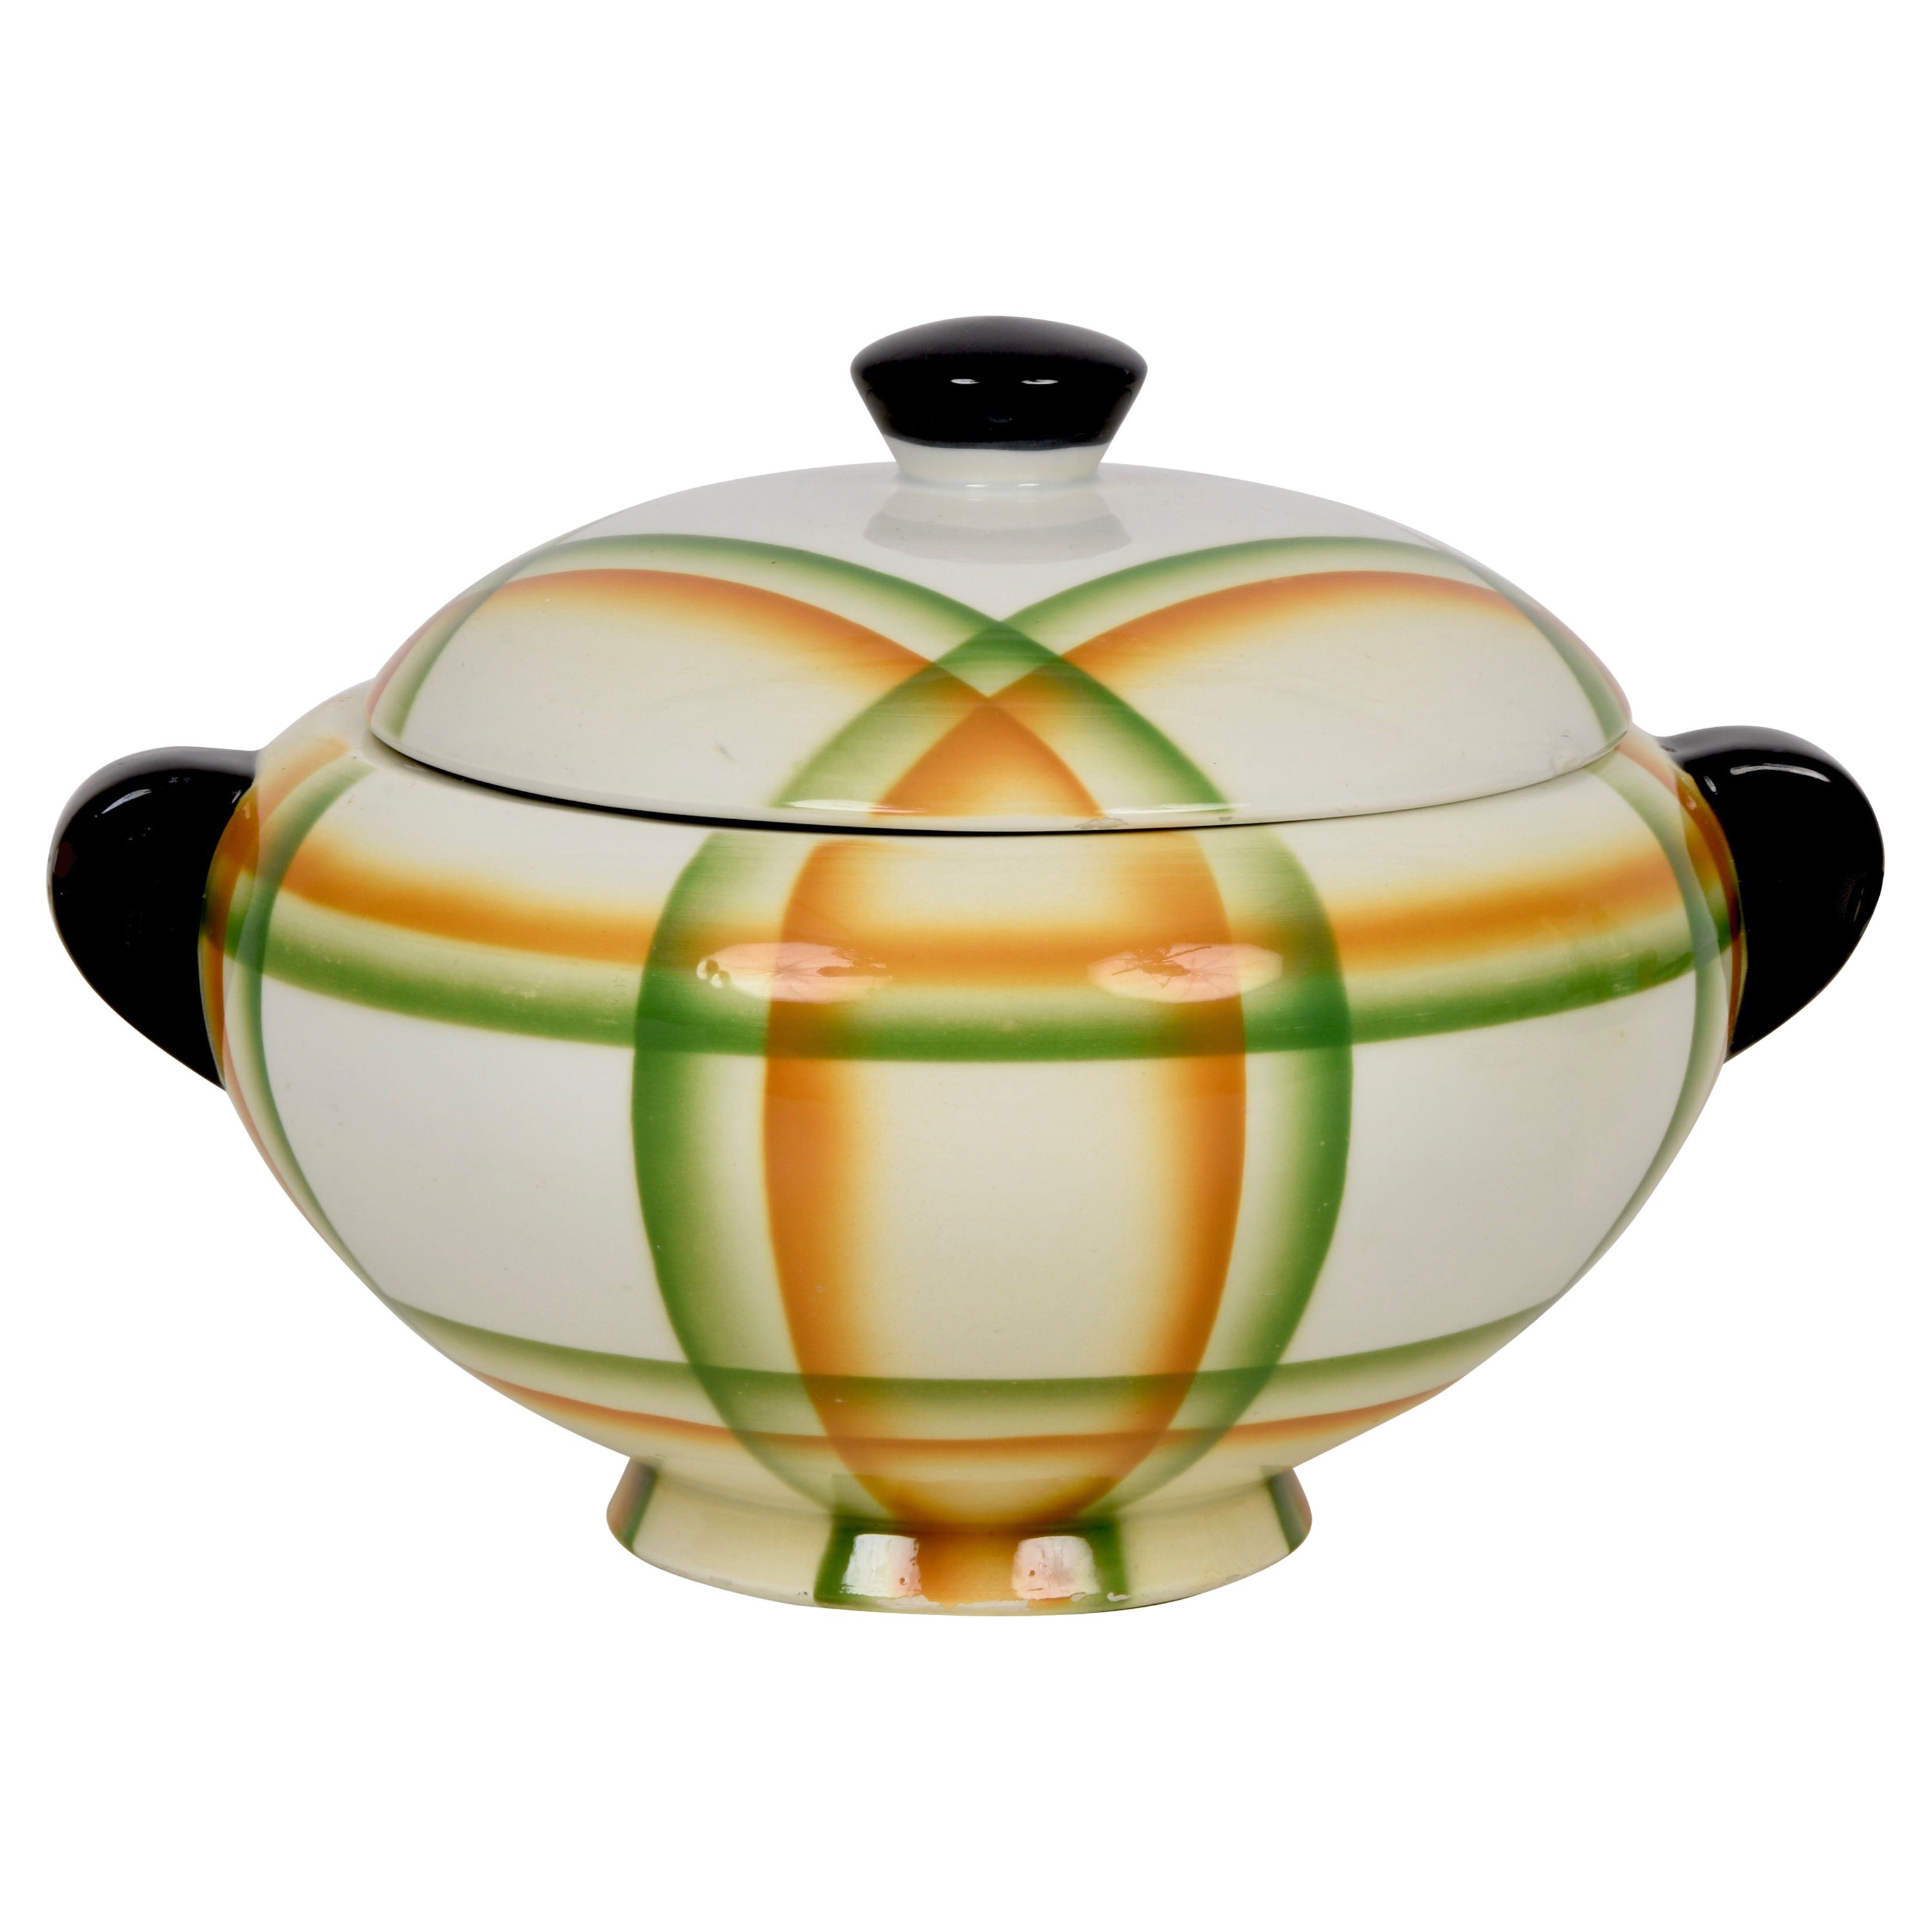 Simonetto Futuristic Airbrushed Ceramic Italian Centerpiece Soup Bowl, 1930s